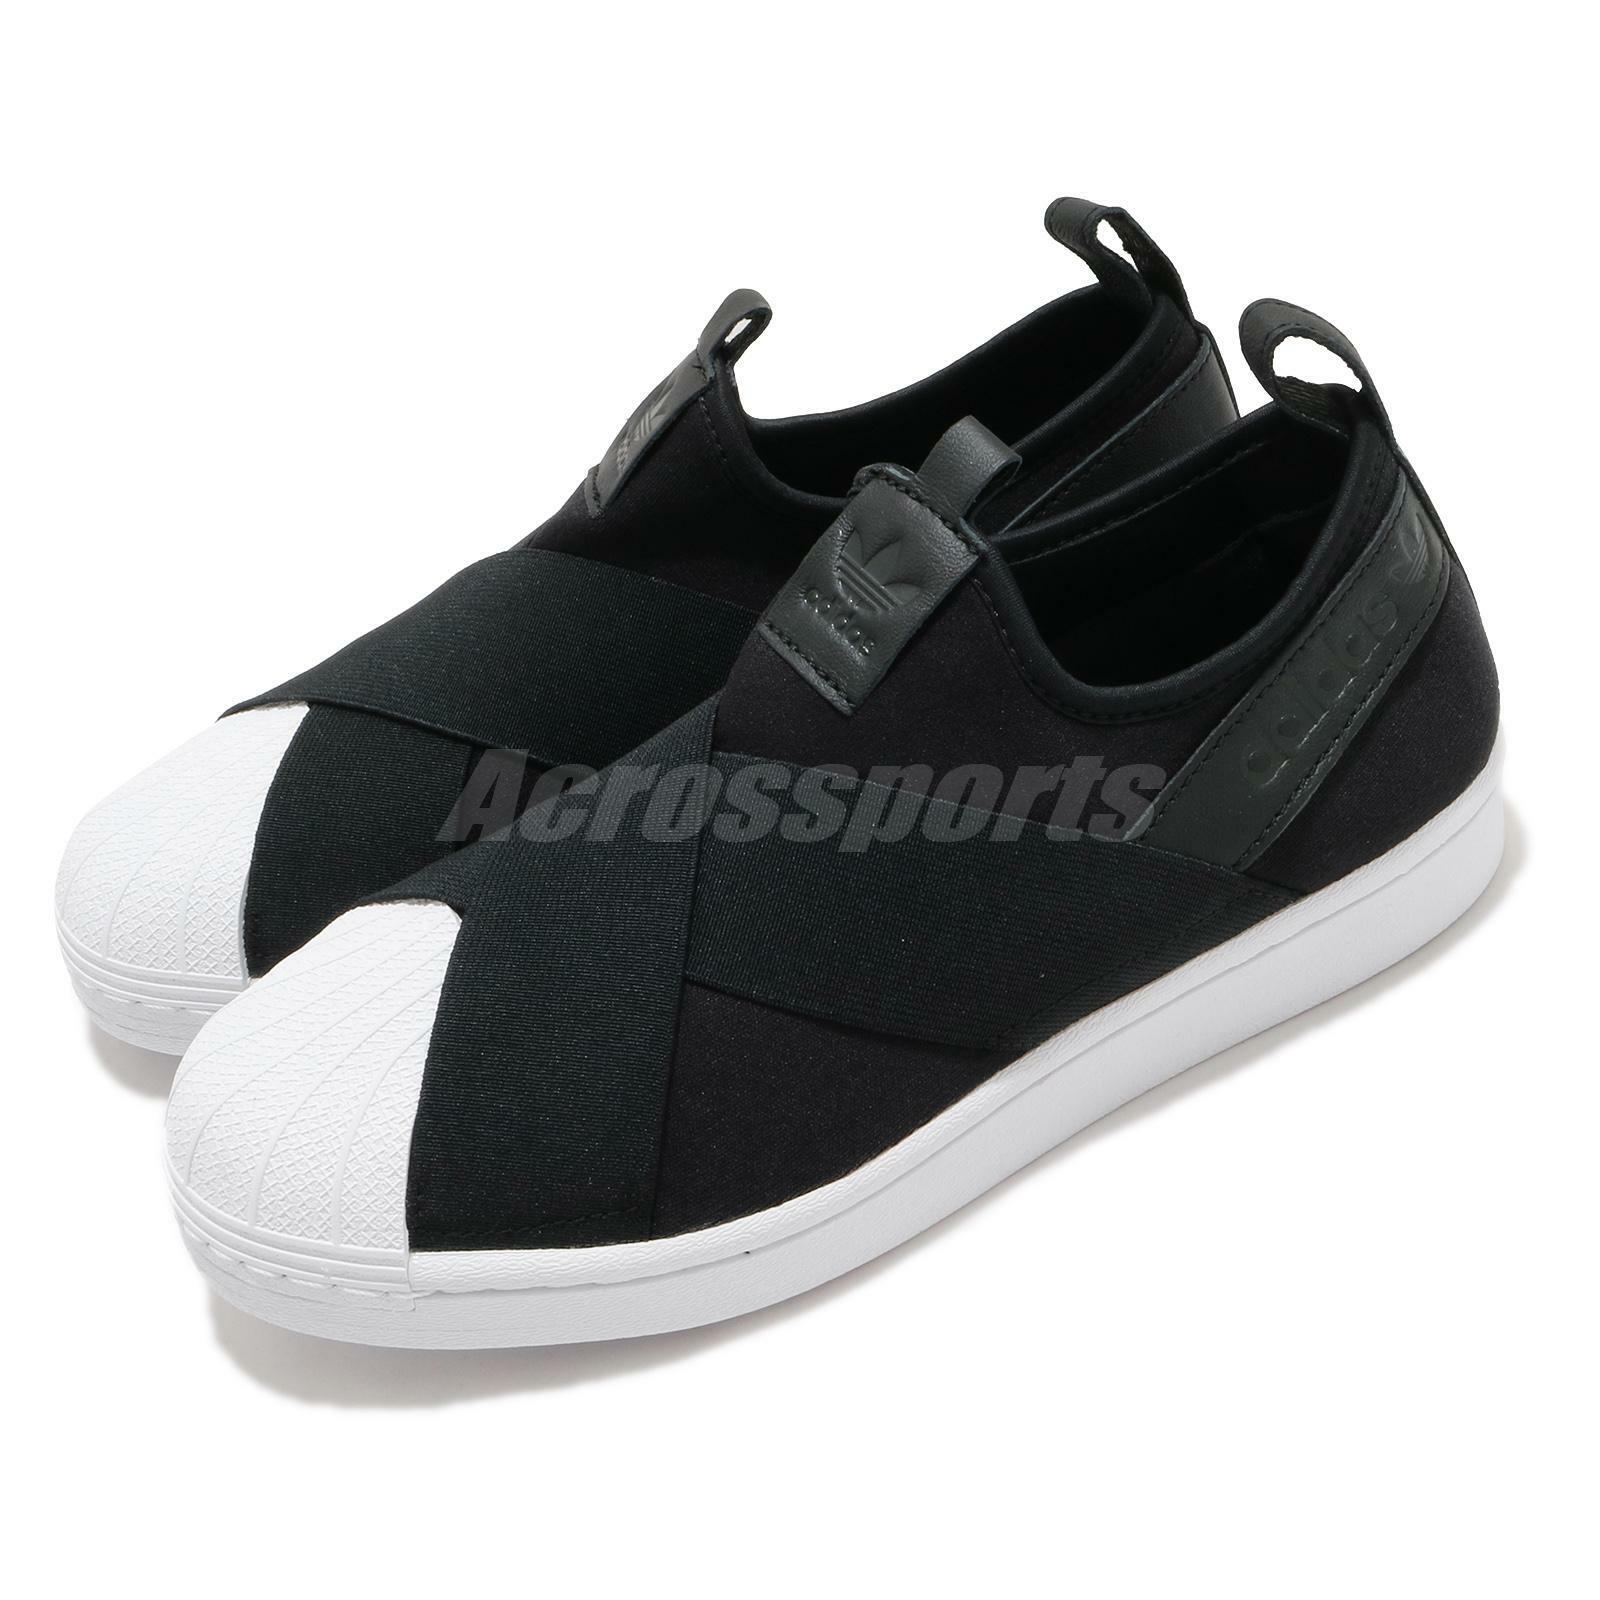 Interpreter tense Disguised adidas Originals Superstar Slip On Black White Men Unisex Casual Shoes  FW7051 | eBay